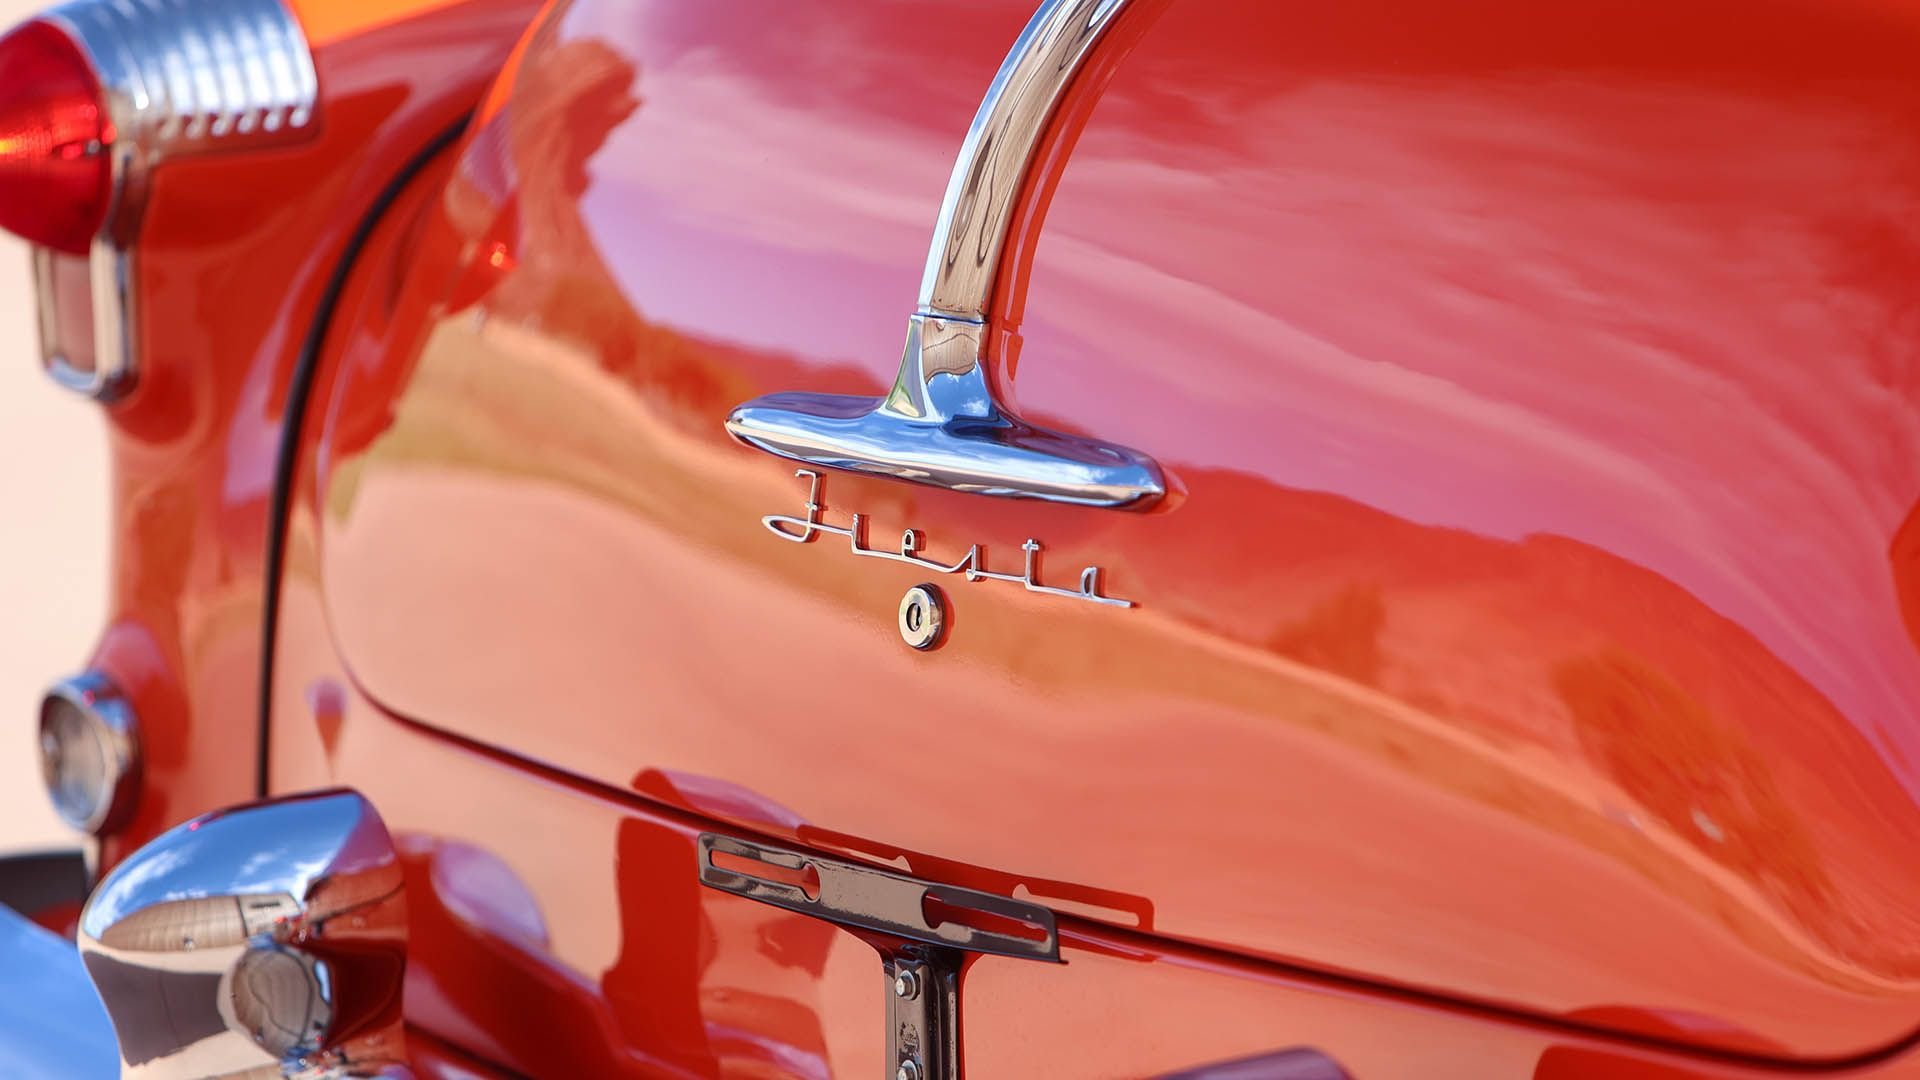 For Sale 1953 Oldsmobile Ninety-Eight Fiesta